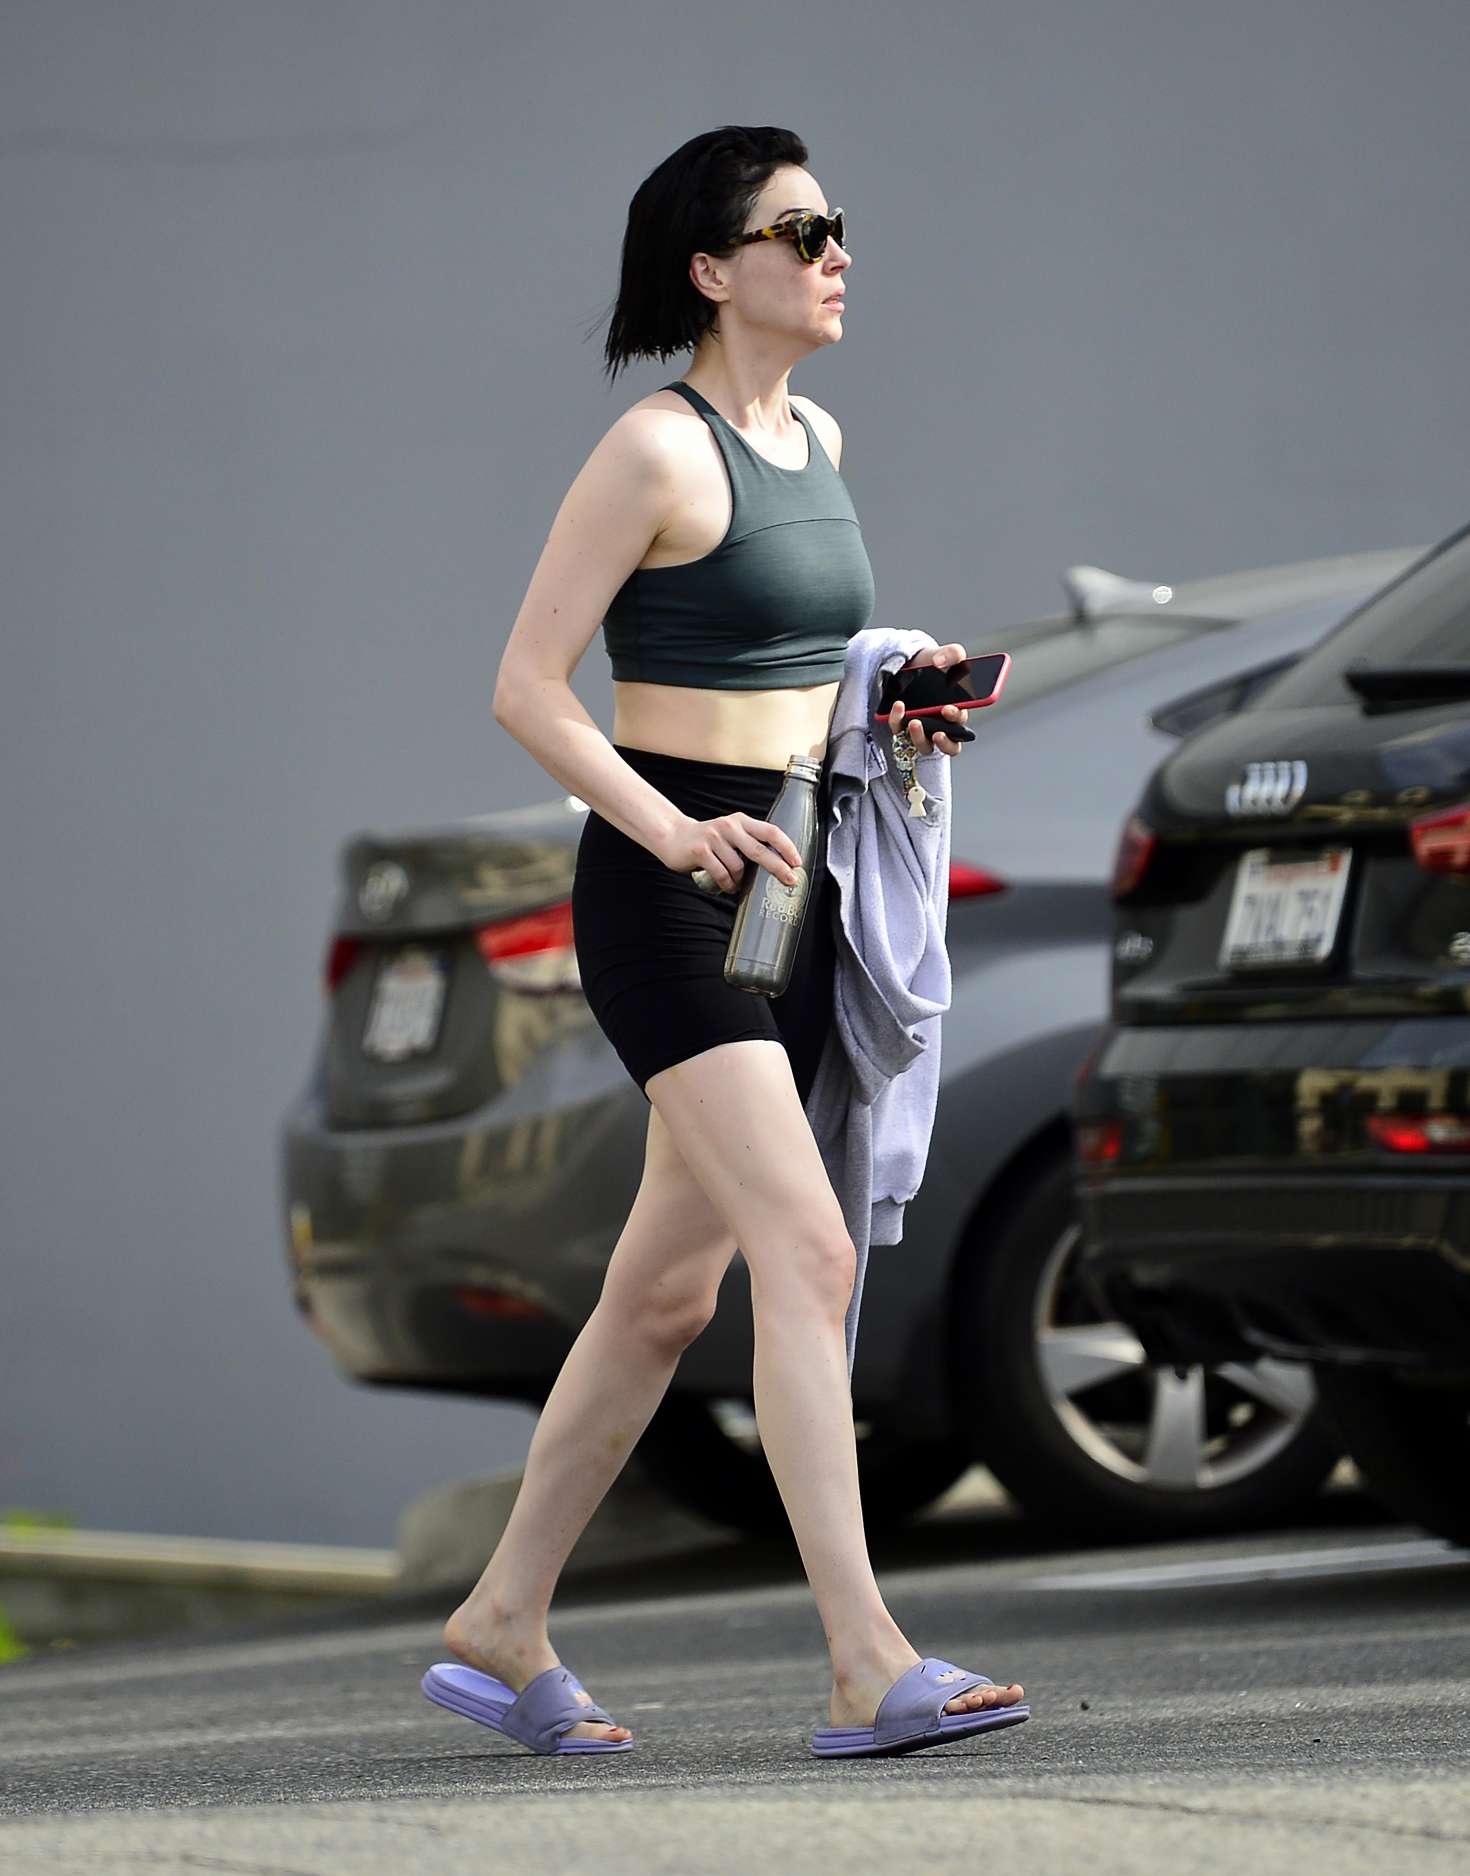 Laura Prepon in Shorts - Leaving pilates class in LA. 